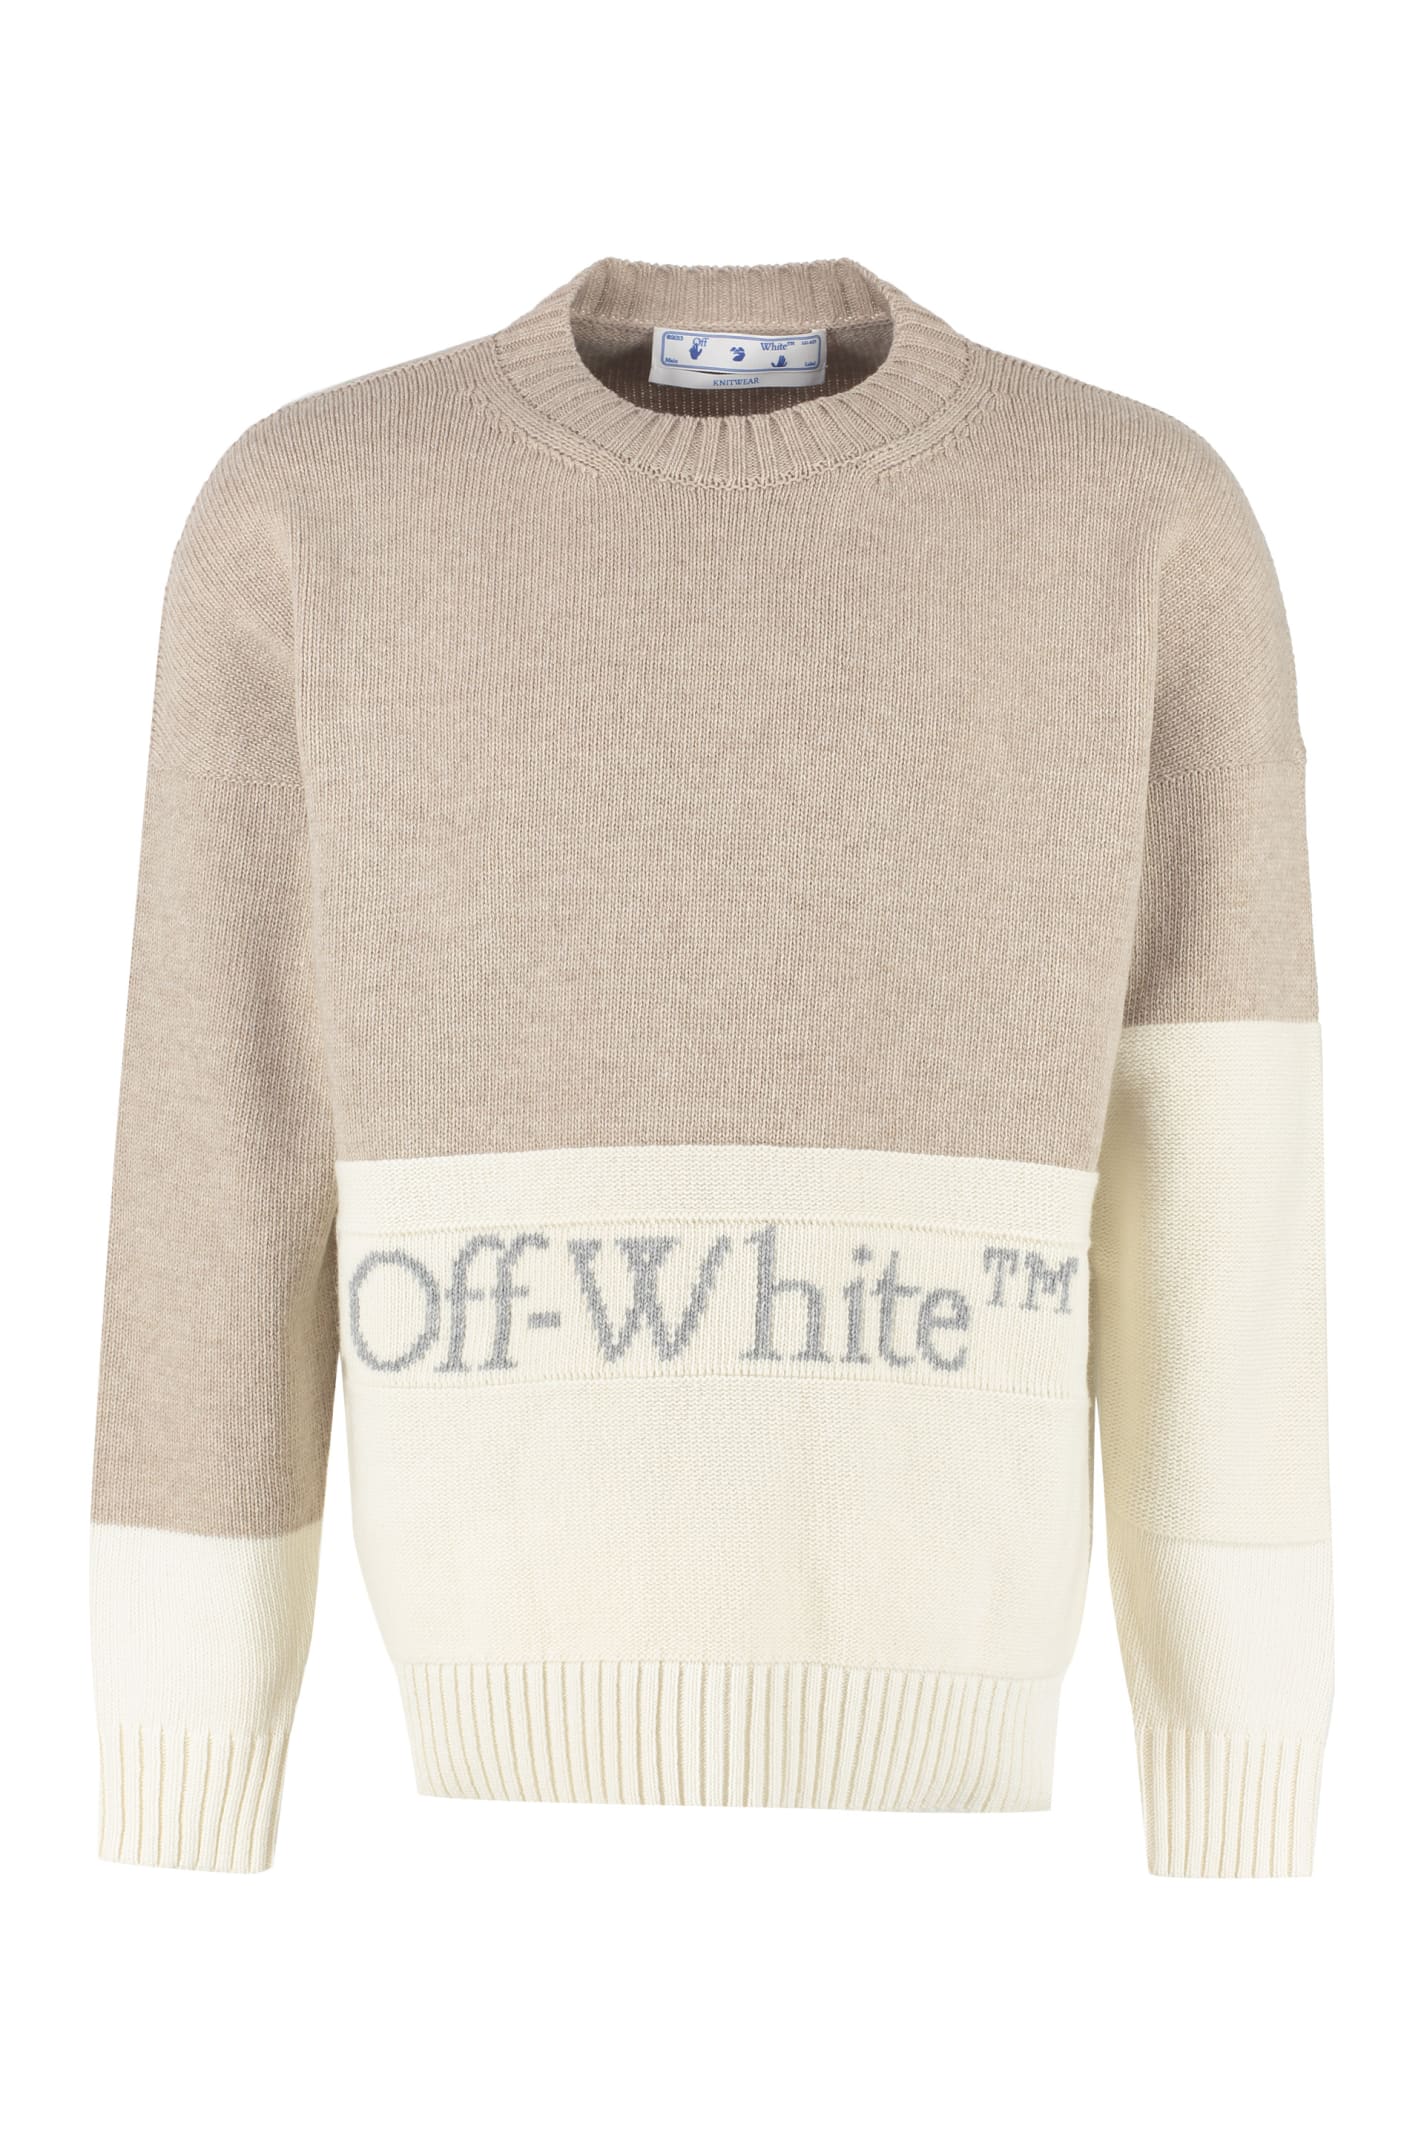 Off-White Virgin Wool Sweater